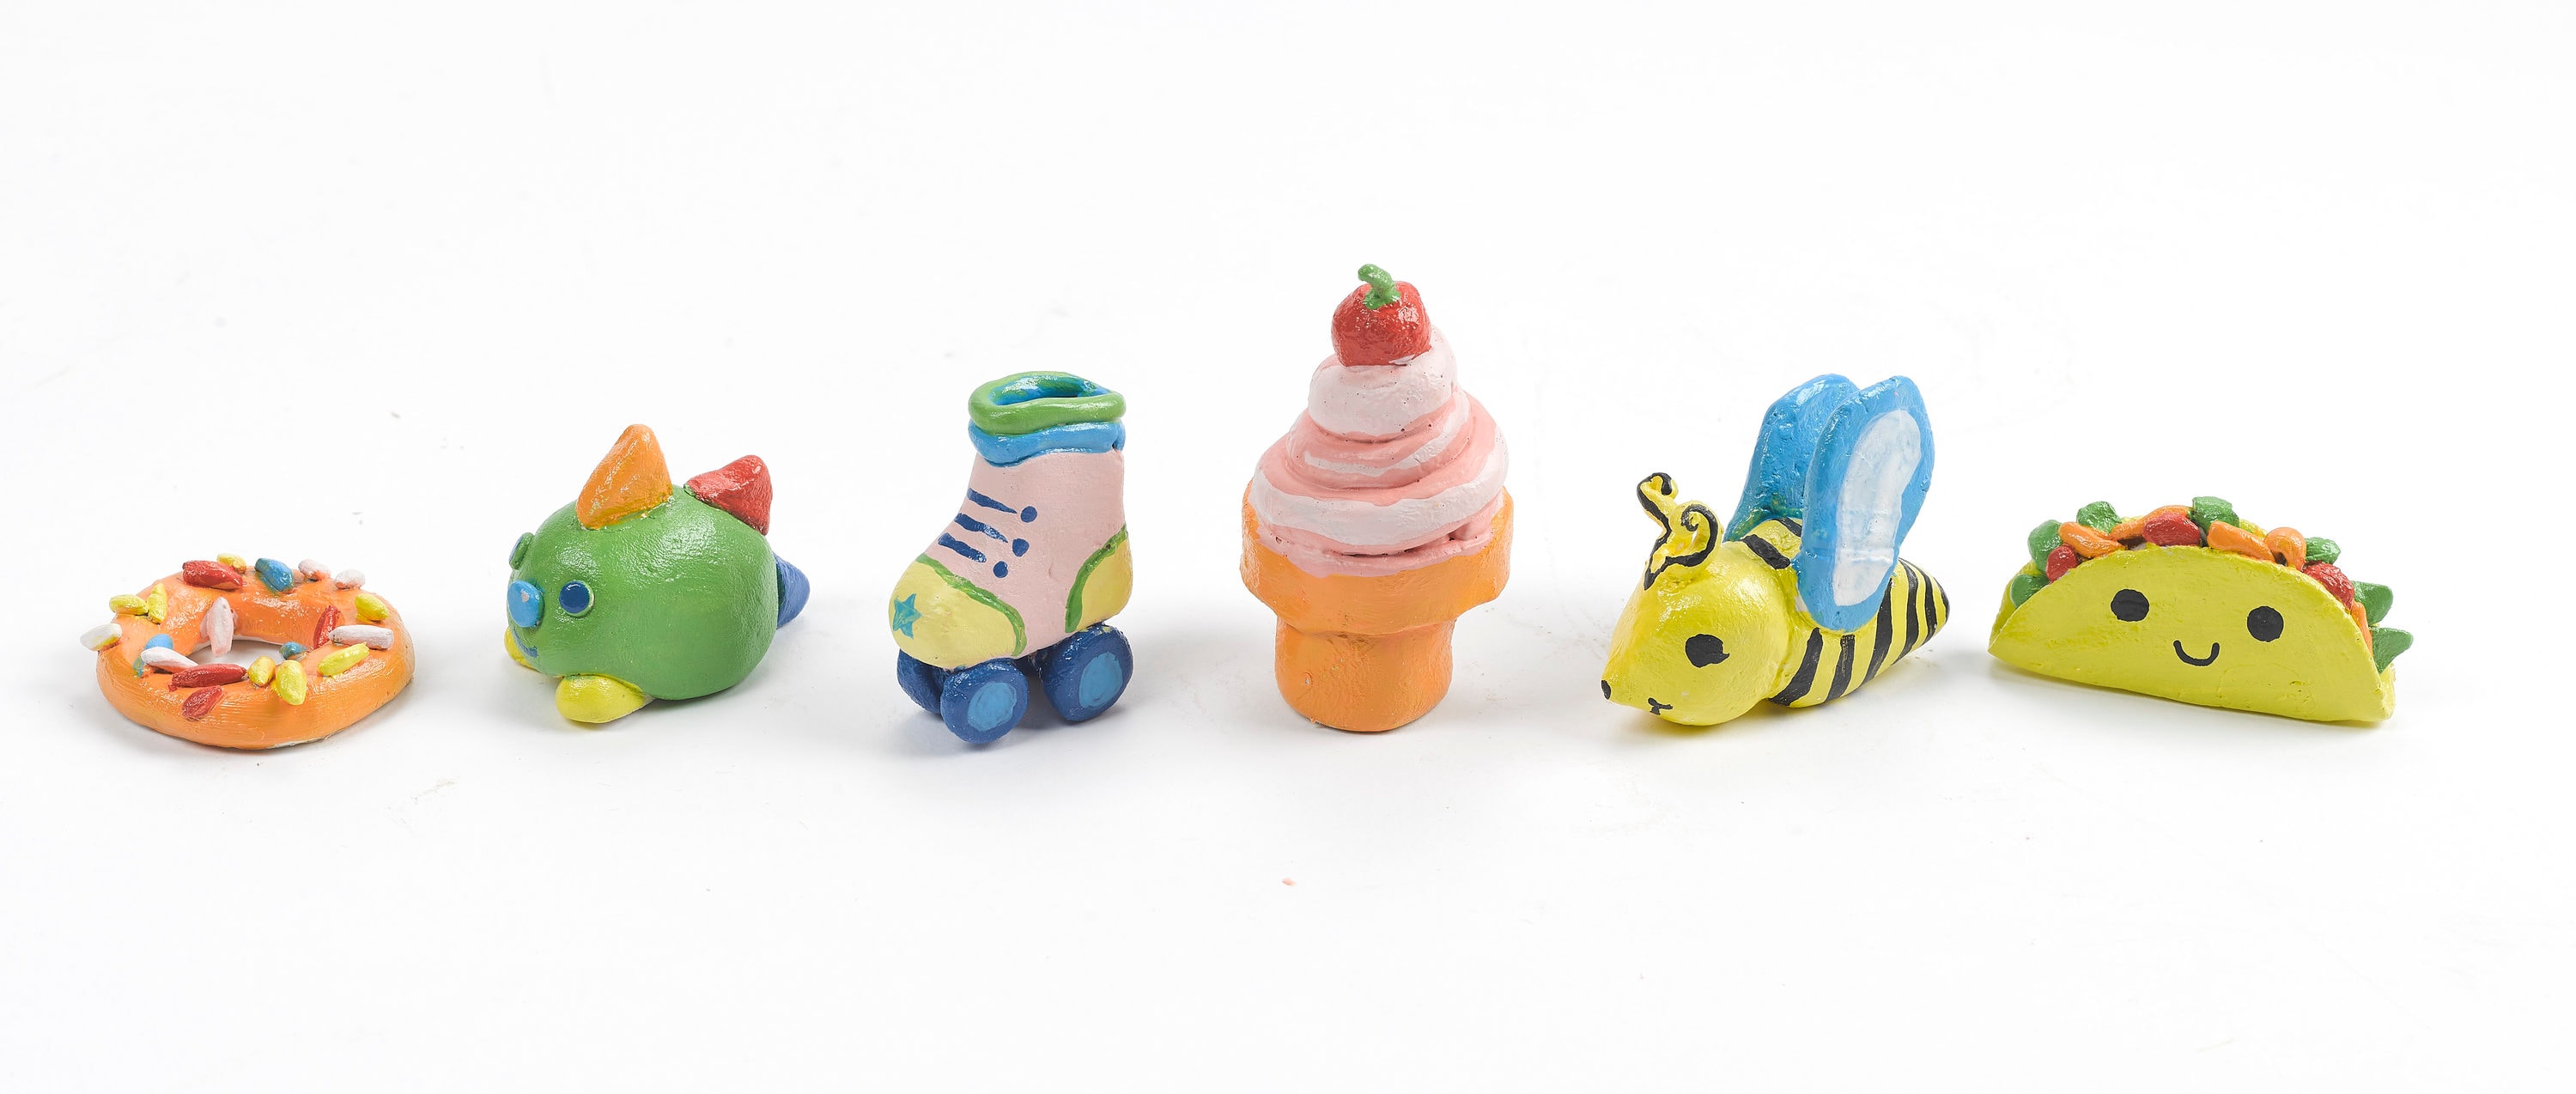 Faber-Castell Do Art Pottery Studio, Pottery Wheel Kit for Kids –  ToysCentral - Europe